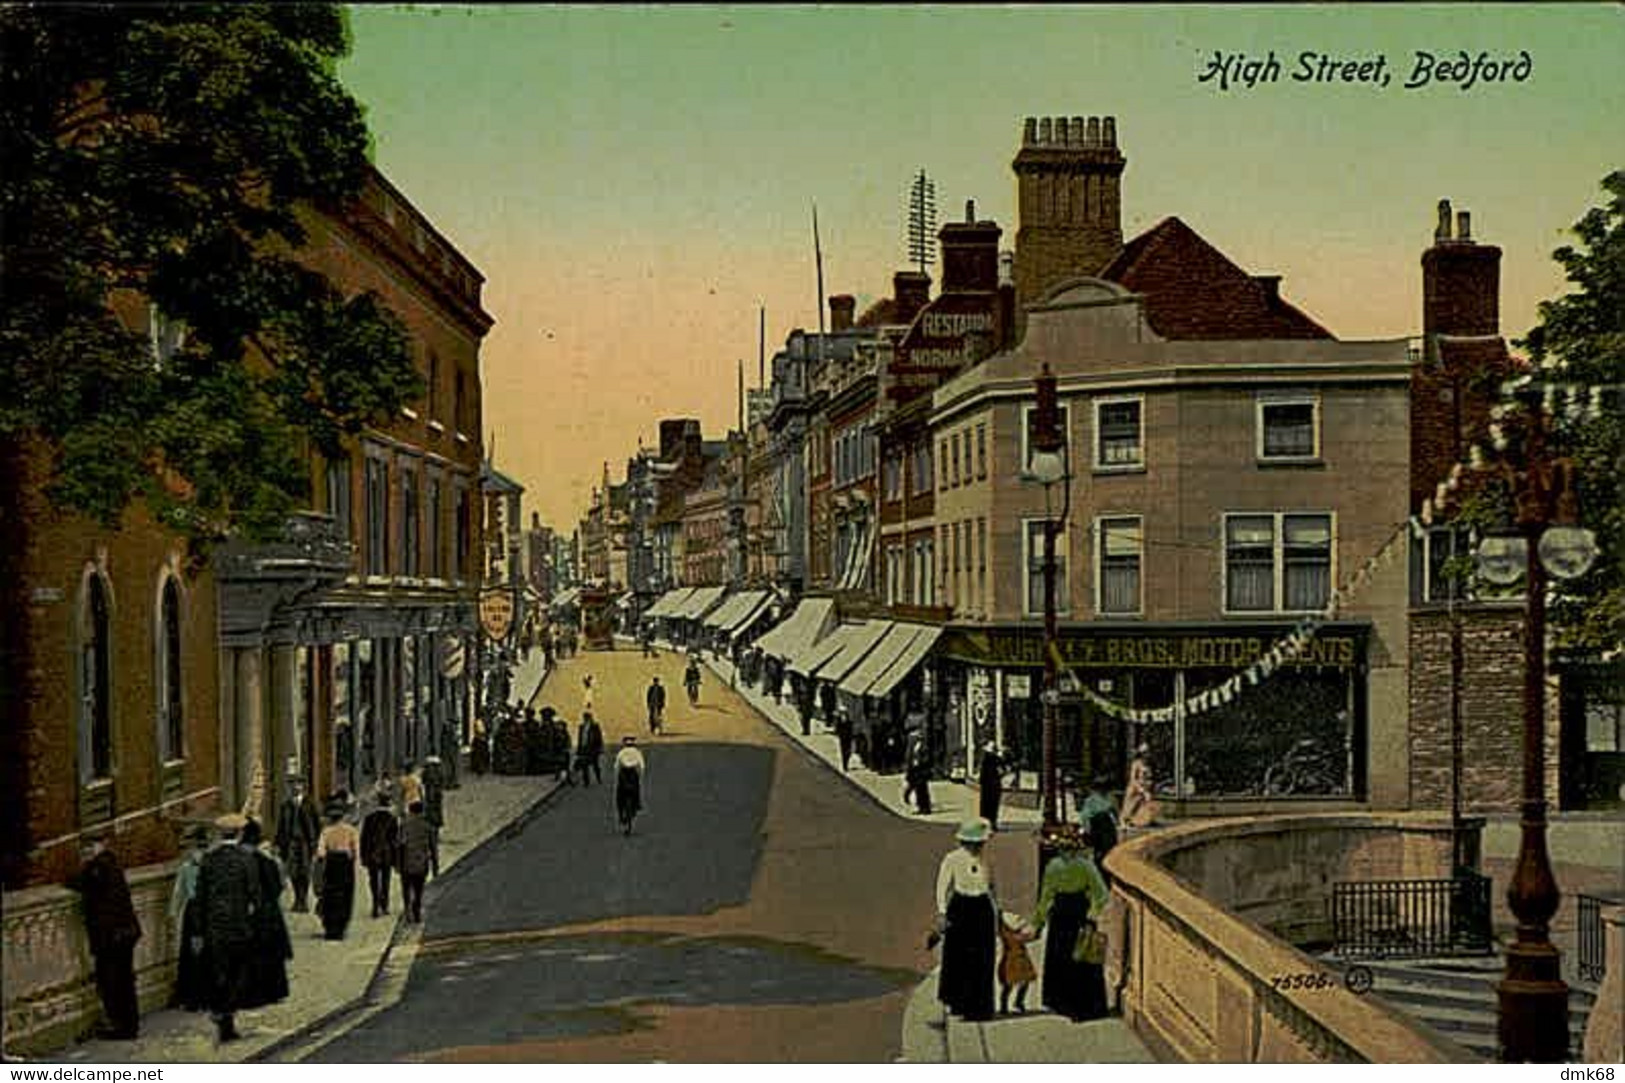 UK - BEDFORD - HIGHT STREET - VALENTINE'S SERIE - 1910s (12712) - Bedford